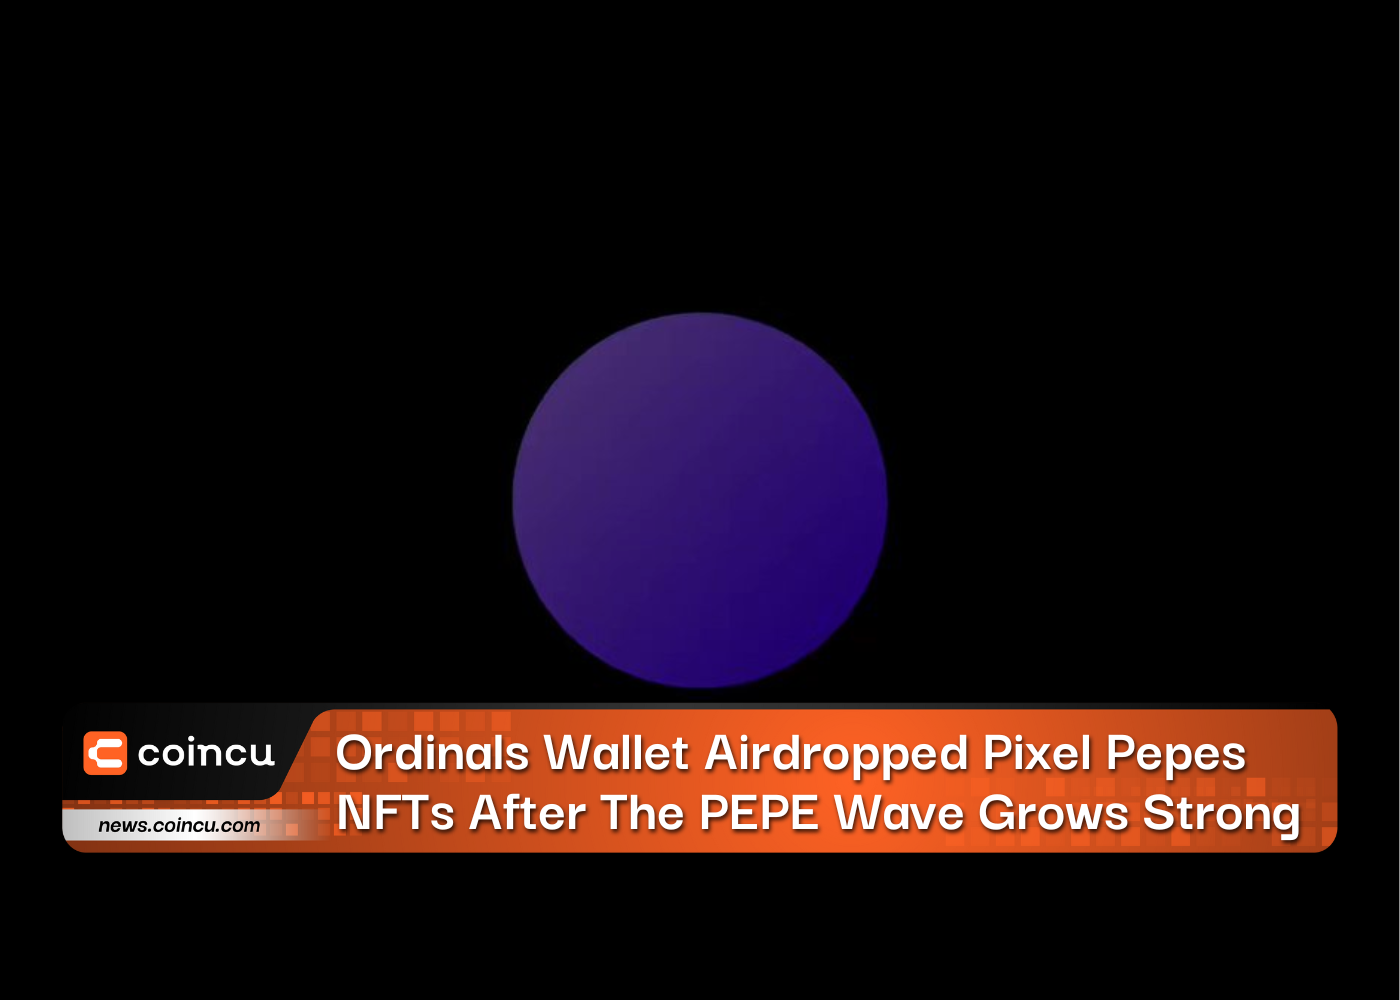 A carteira Ordinals lançou NFTs de Pixel Pepes depois que a onda PEPE se fortaleceu